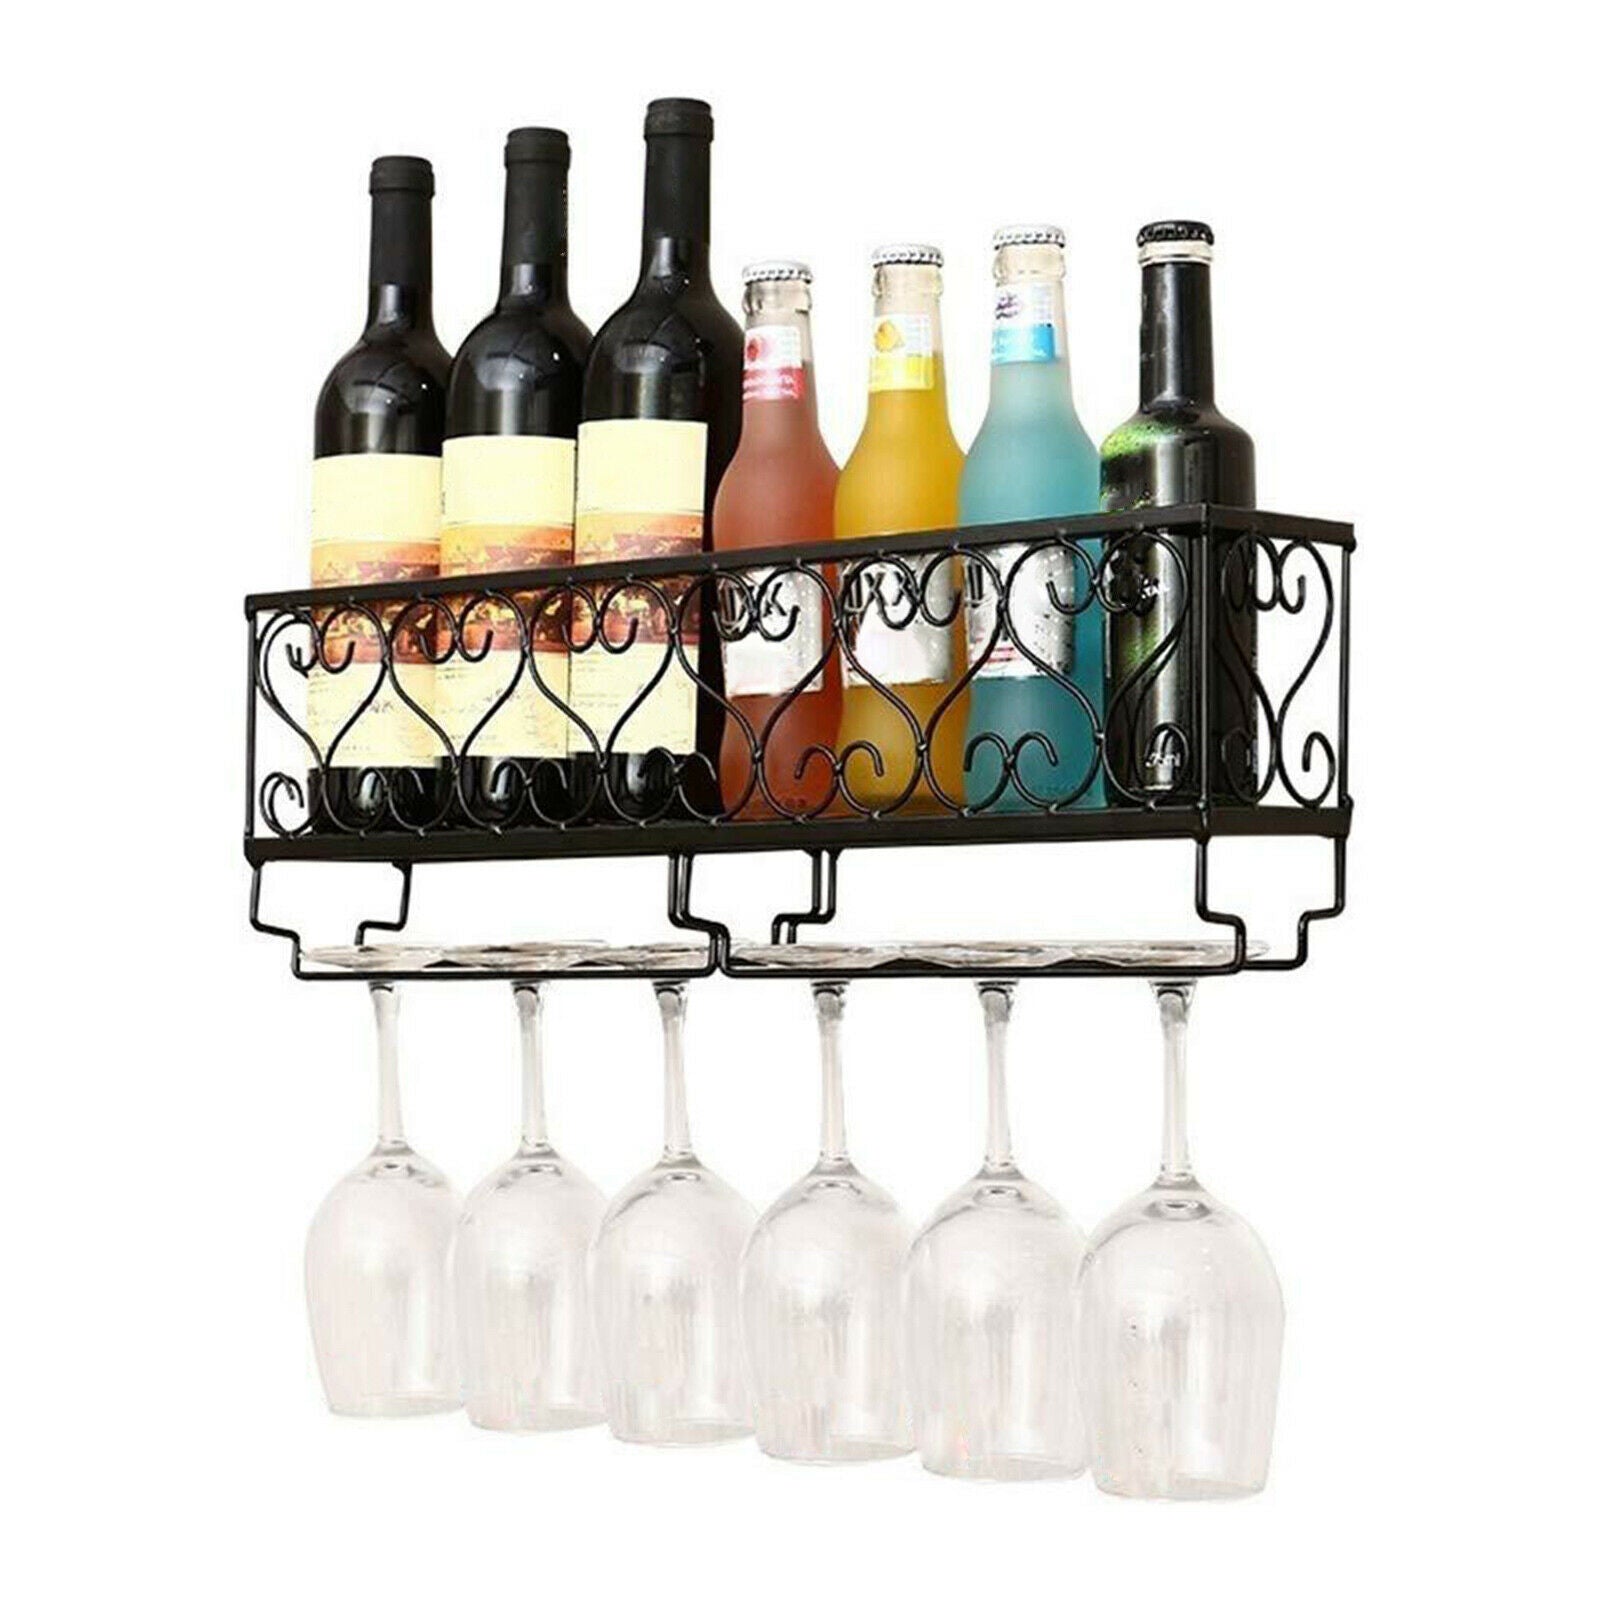 Iron Wine Rack Countertop Holder Home Display for Shelf Organizer Rack